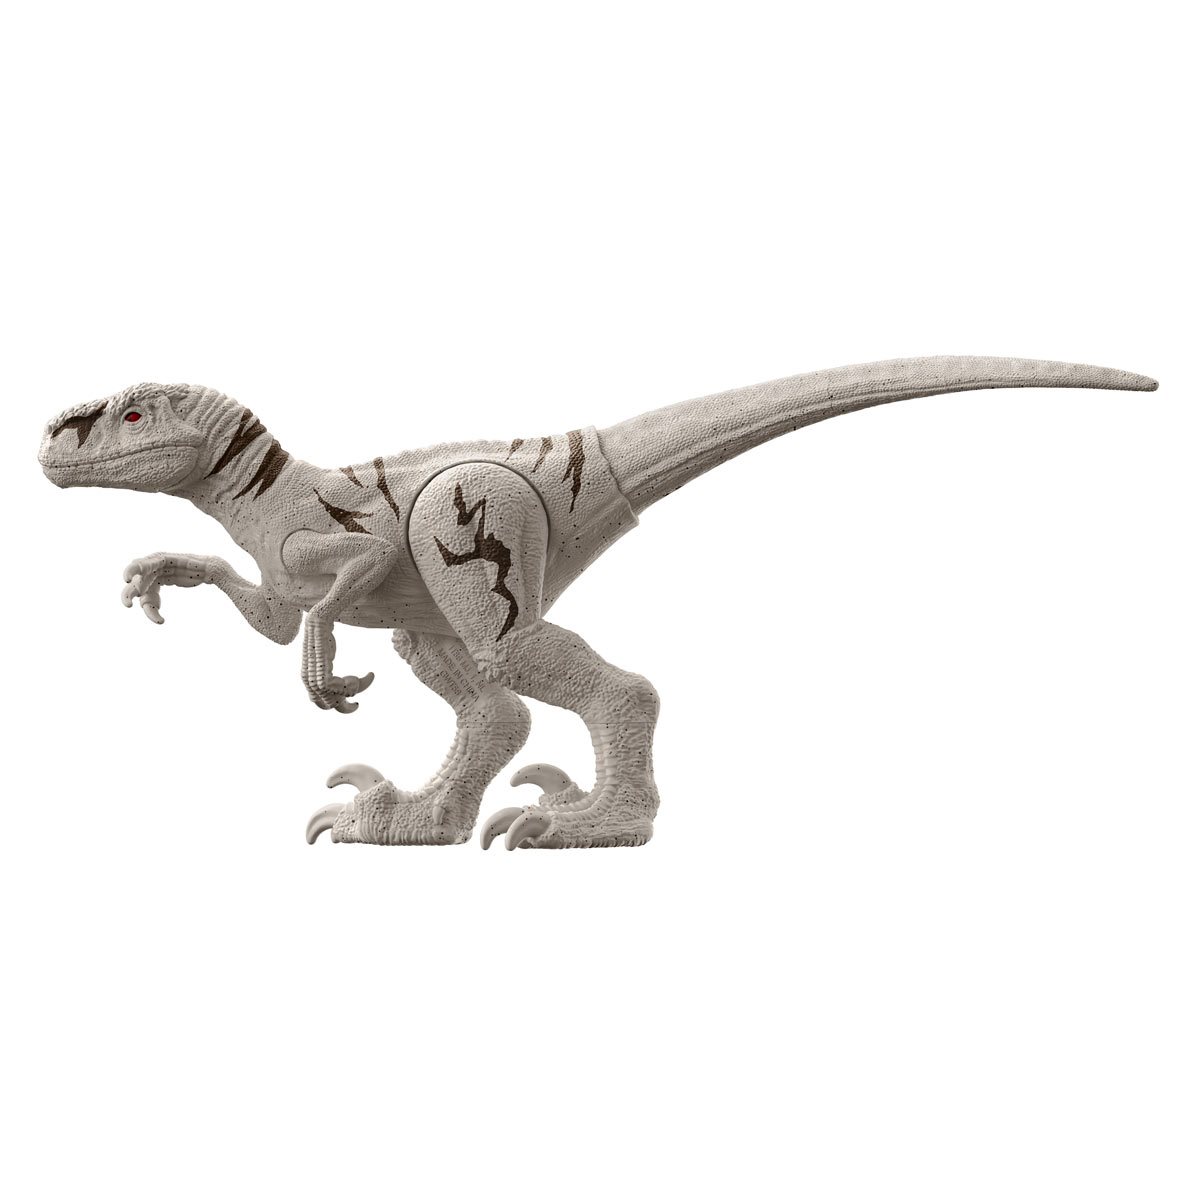 Jurassic World 12-Inch Basic Action Figure Case of 8